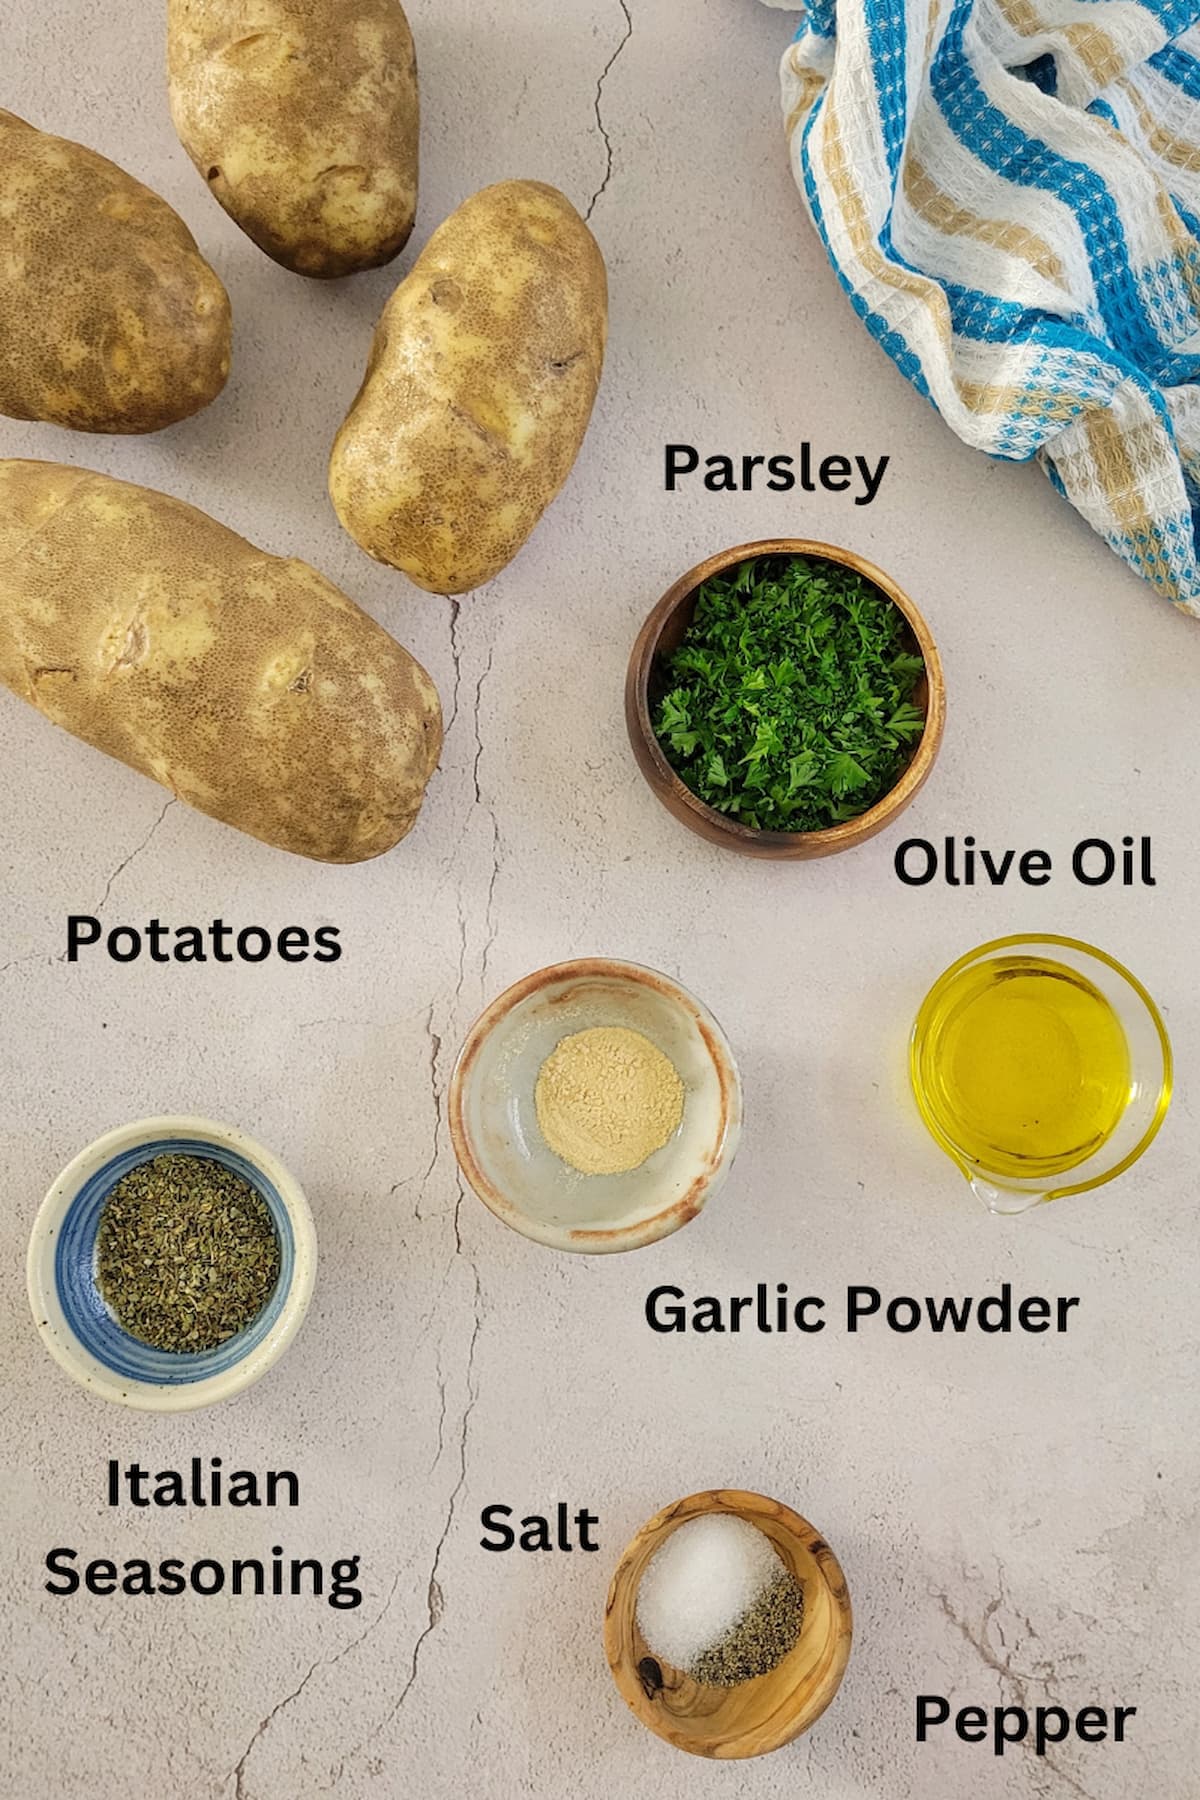 ingredients for homemade home fries in oven - potatoes, parsley, olive oil, italian seasoning, garlic powder, salt, pepper